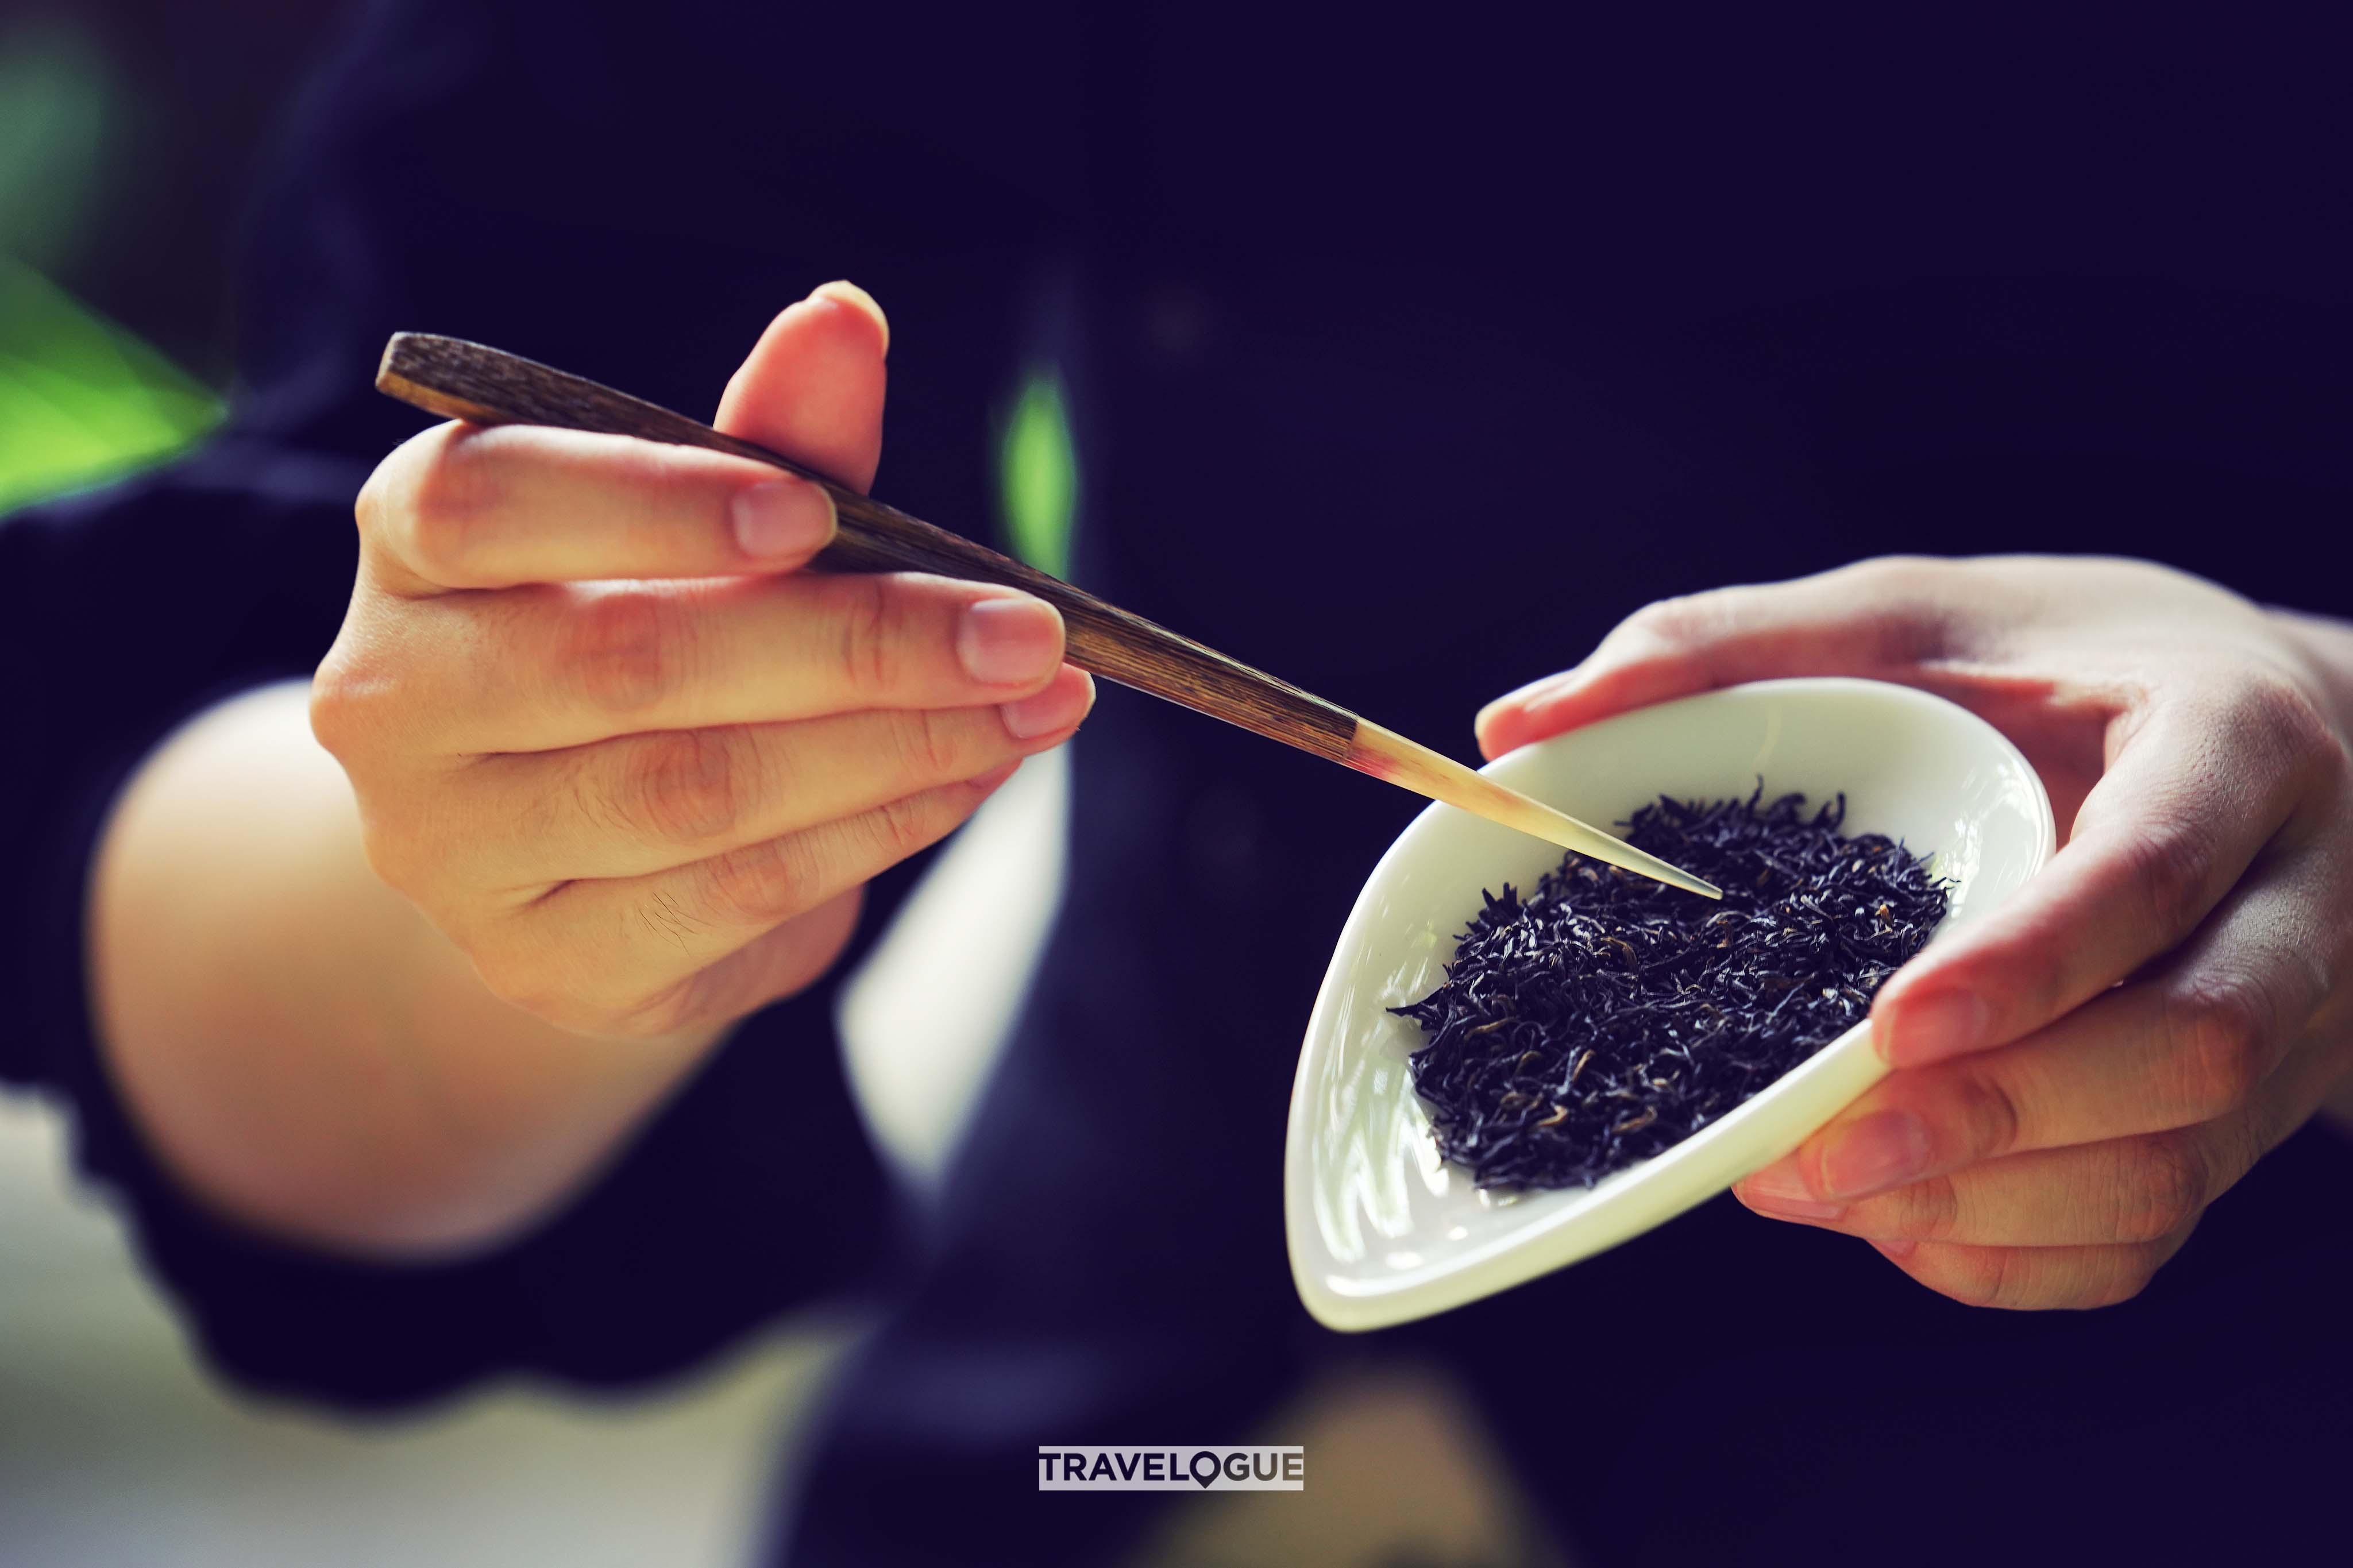 Keemun black tea has a regal allure as the self-proclaimed favorite of the late Queen Elizabeth II. /CGTN